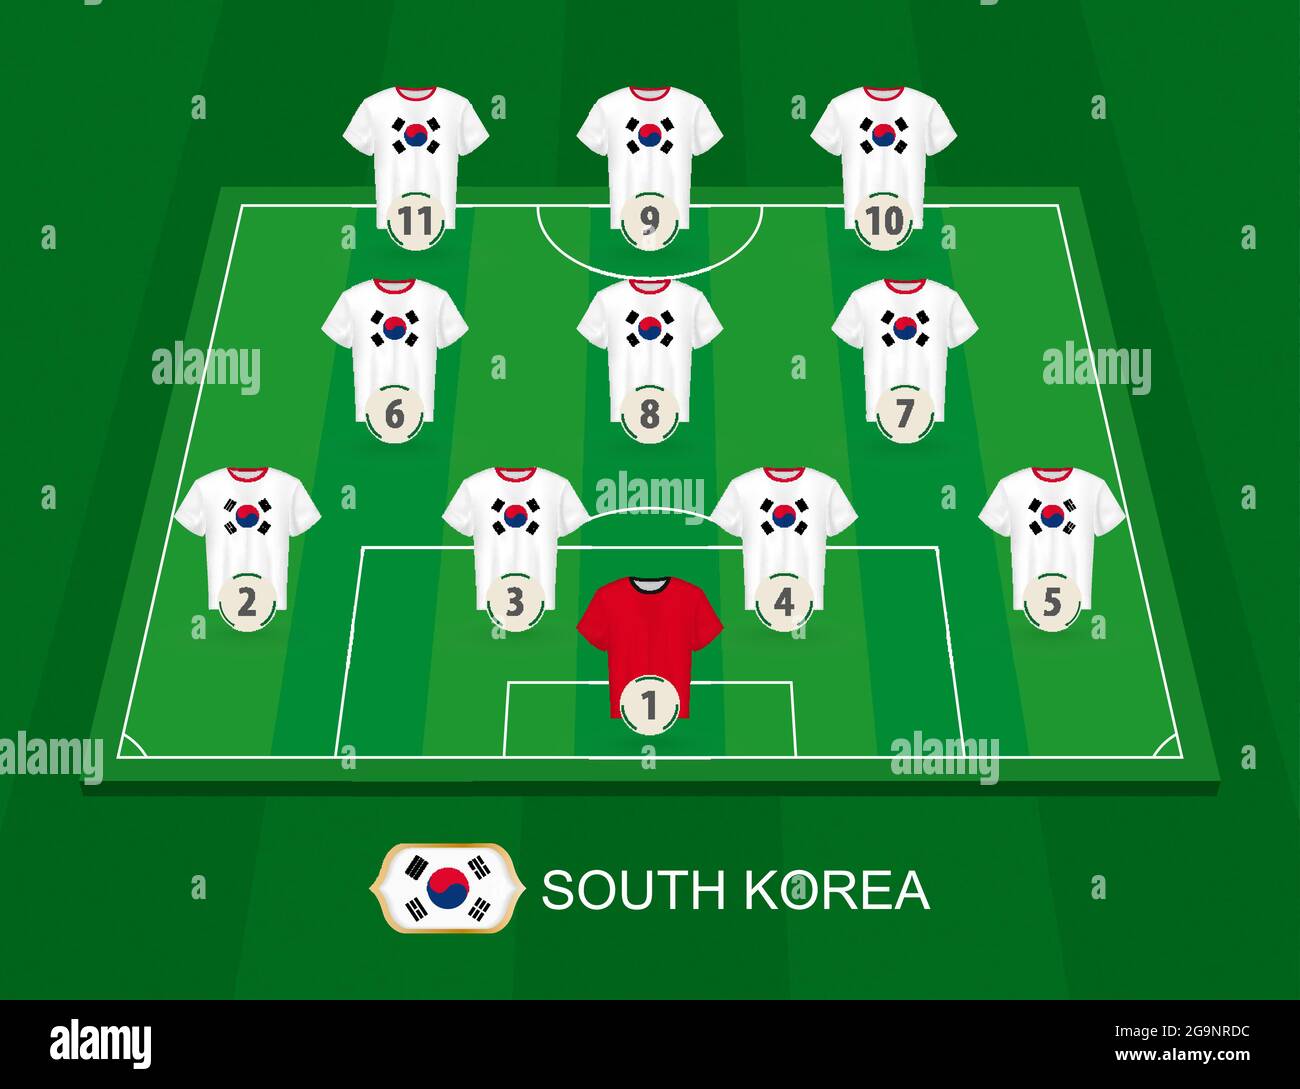 Uruguay National Football Team Vs South Korea National Football Team Lineups